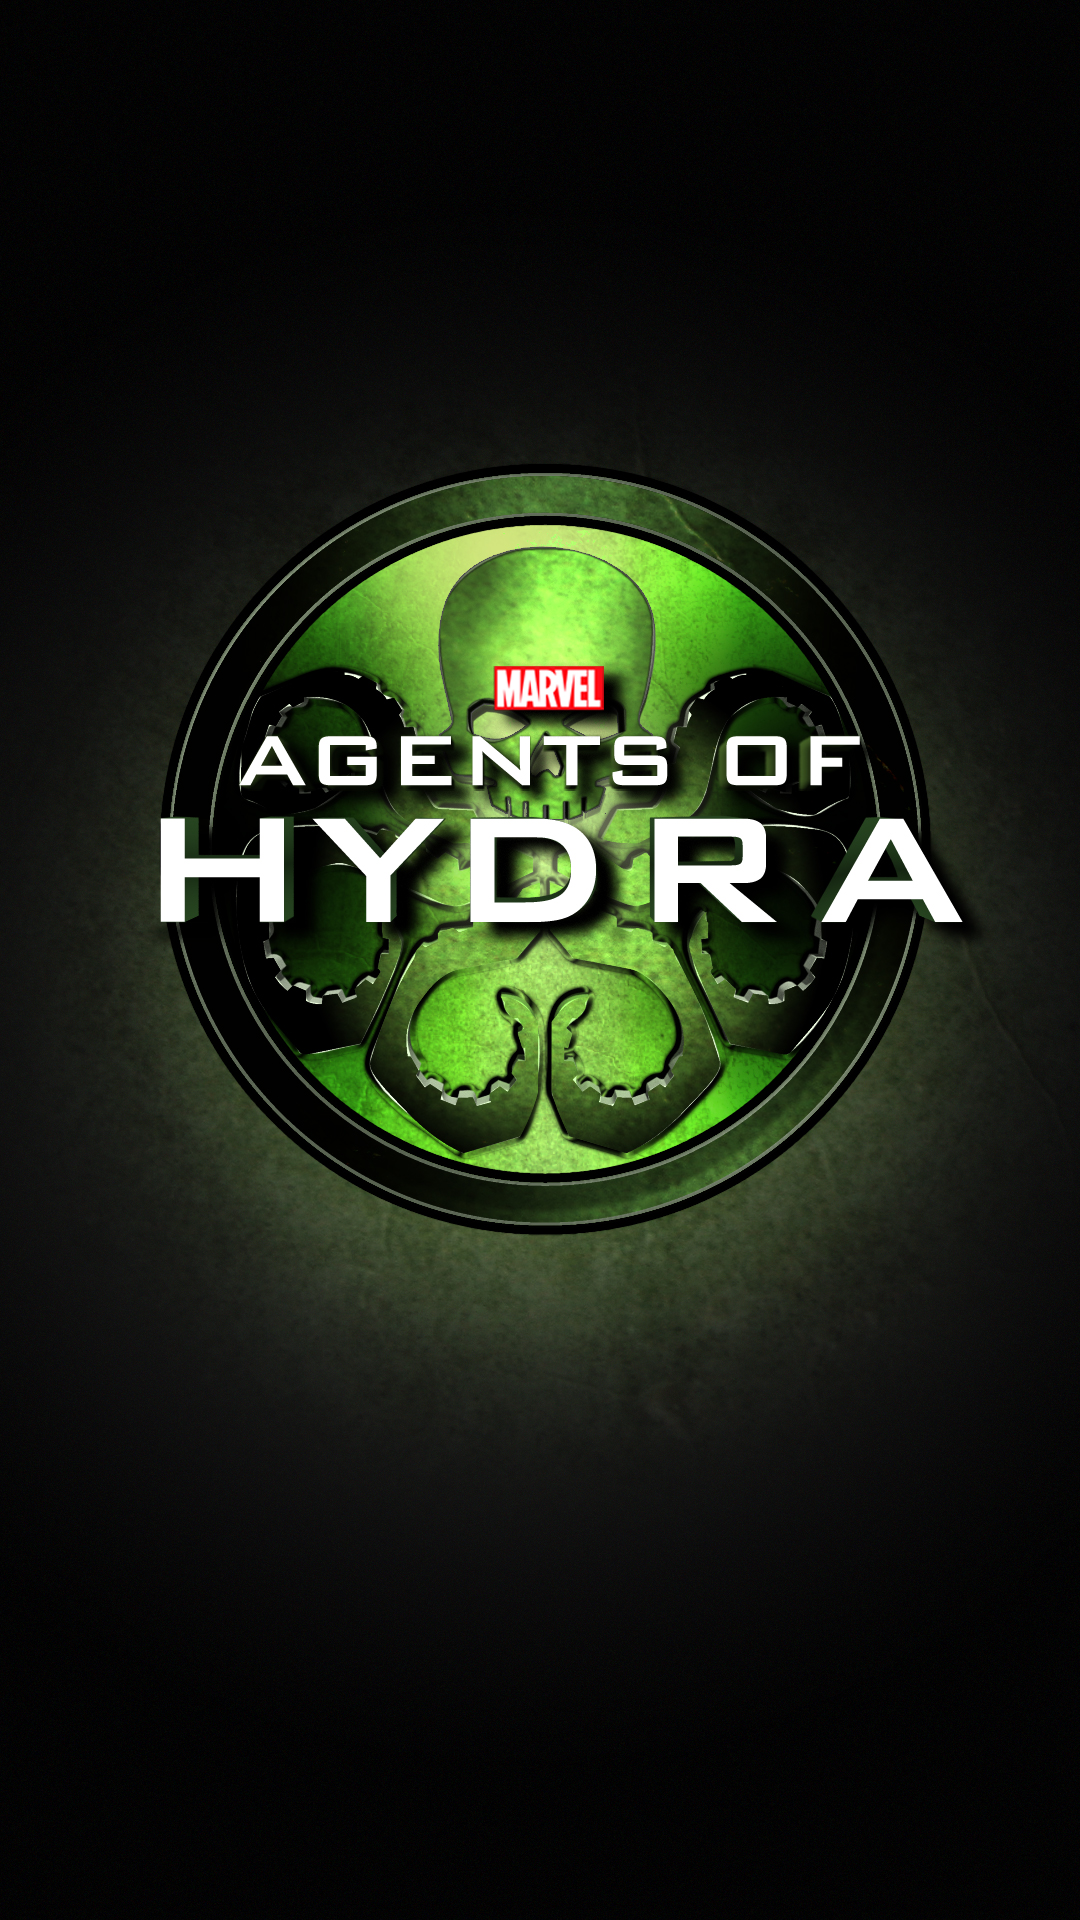 Agents of HYDRA Logo by Starfade